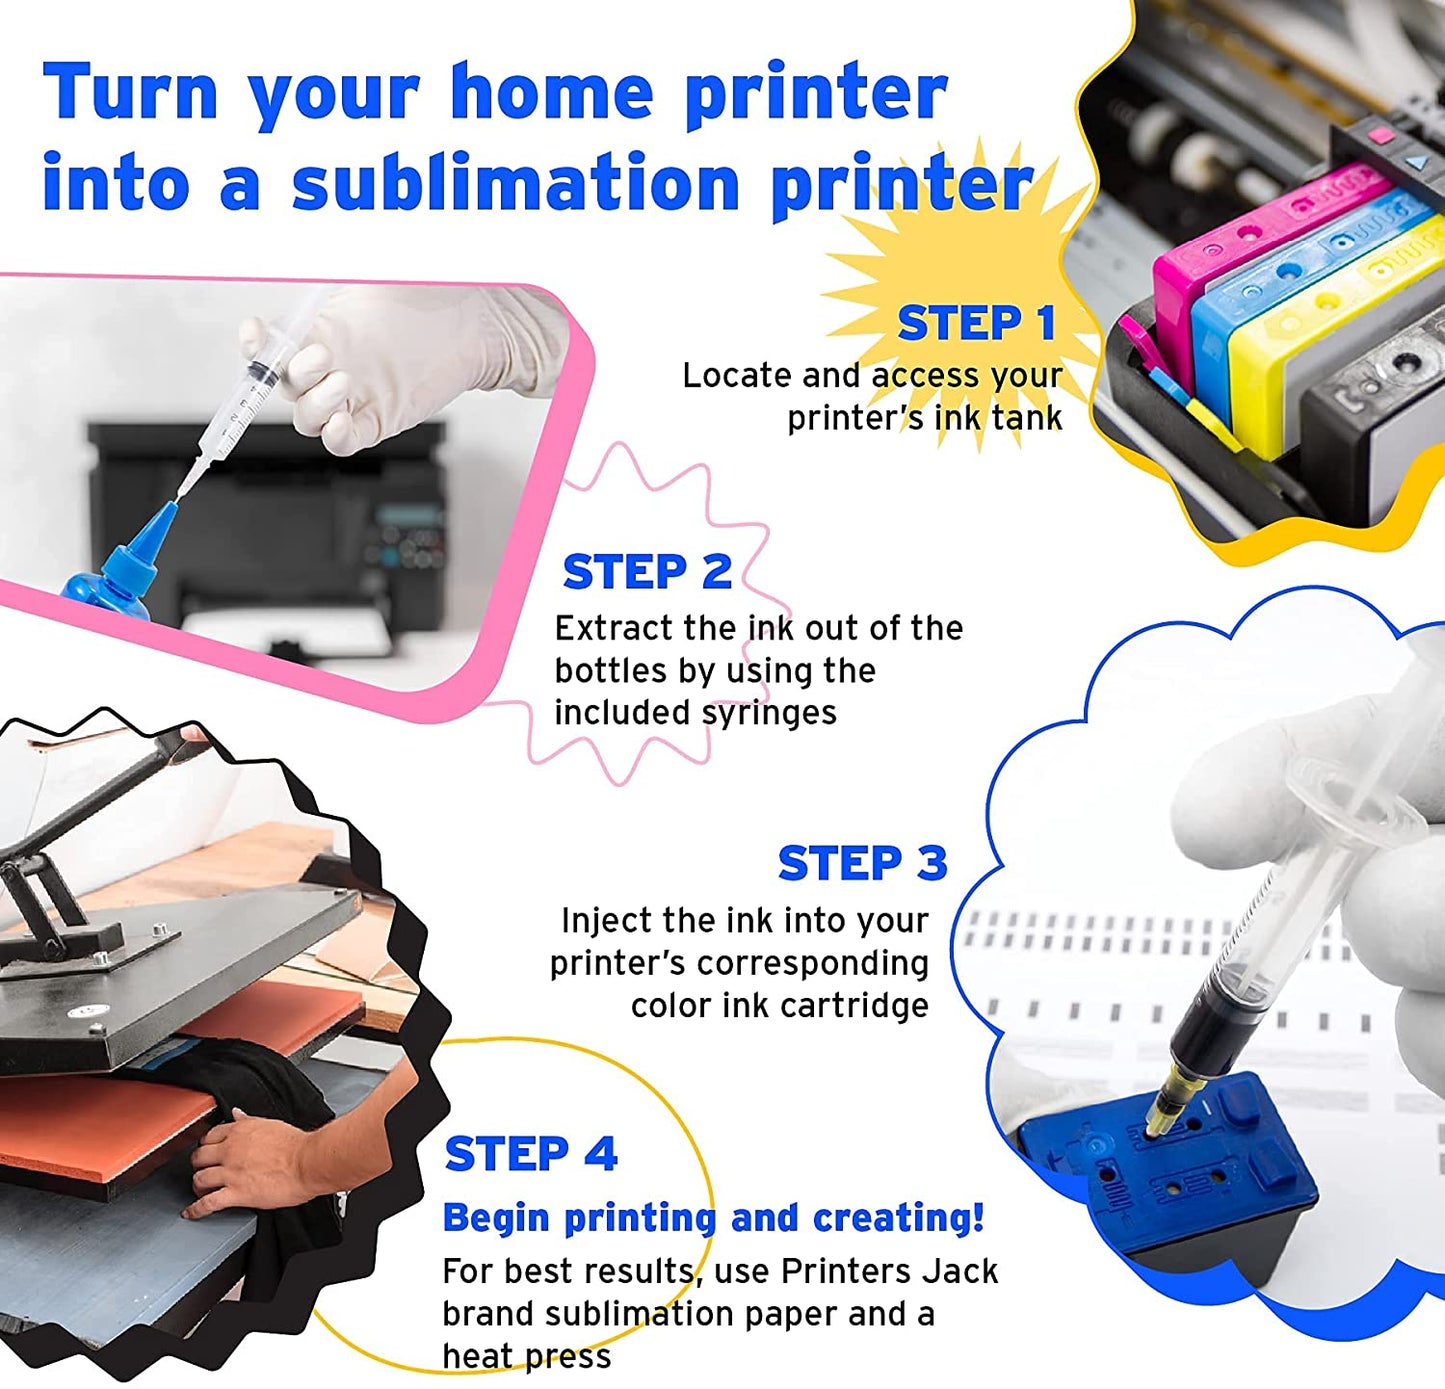 Colorful Printers Jack Sublimation Ink Printer - China Dye